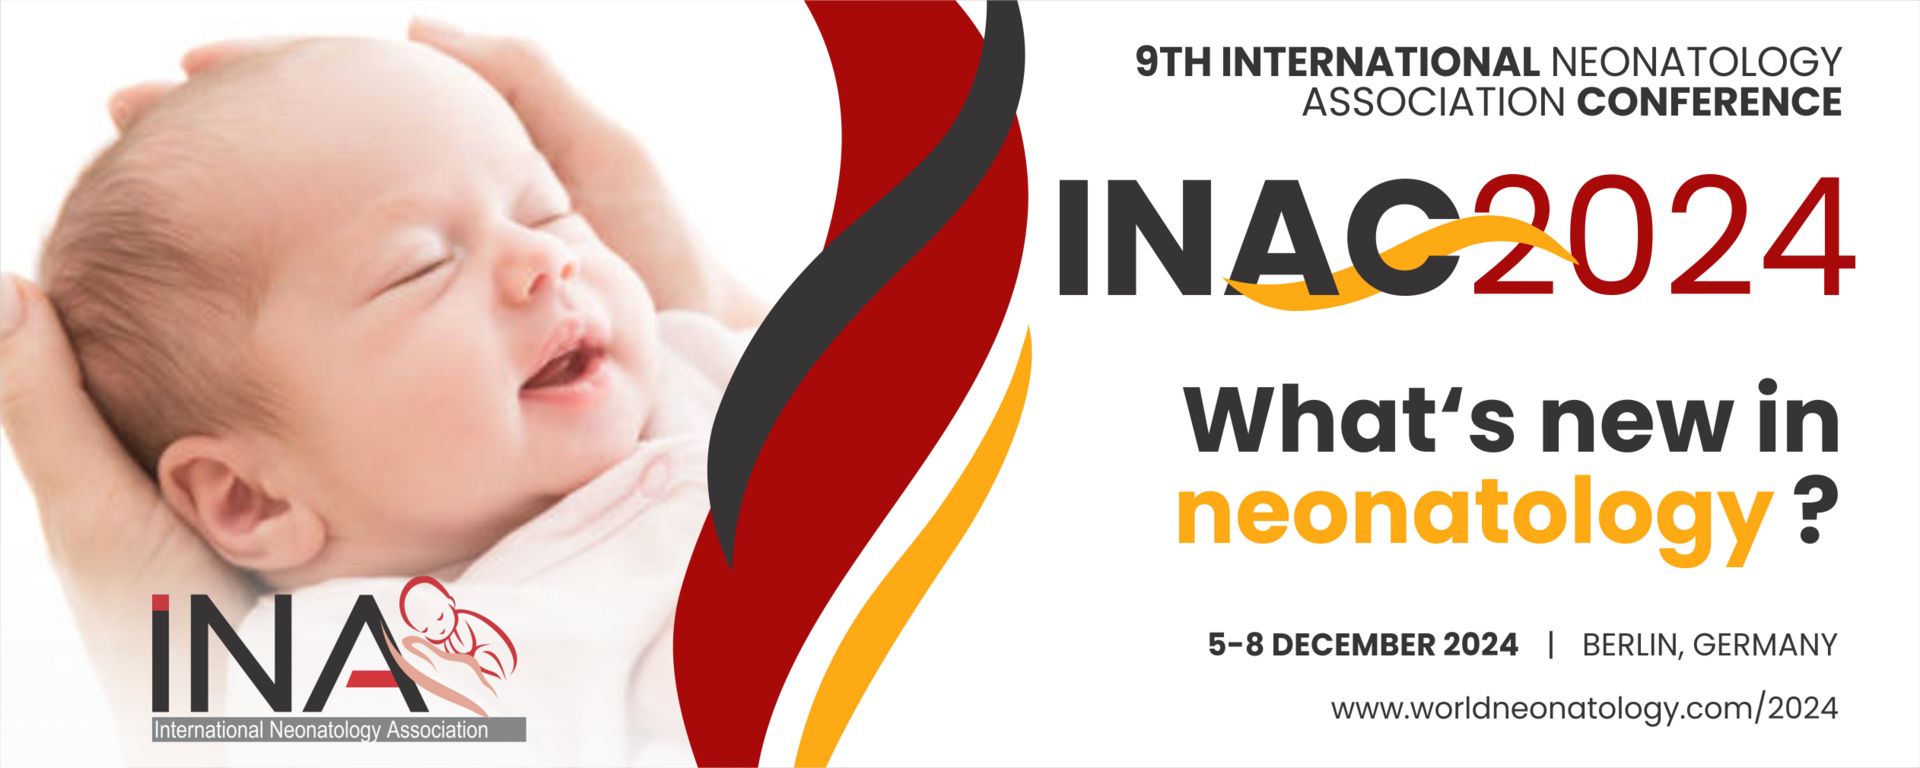 INAC 2024 - 9th International Neonatology Association Conference